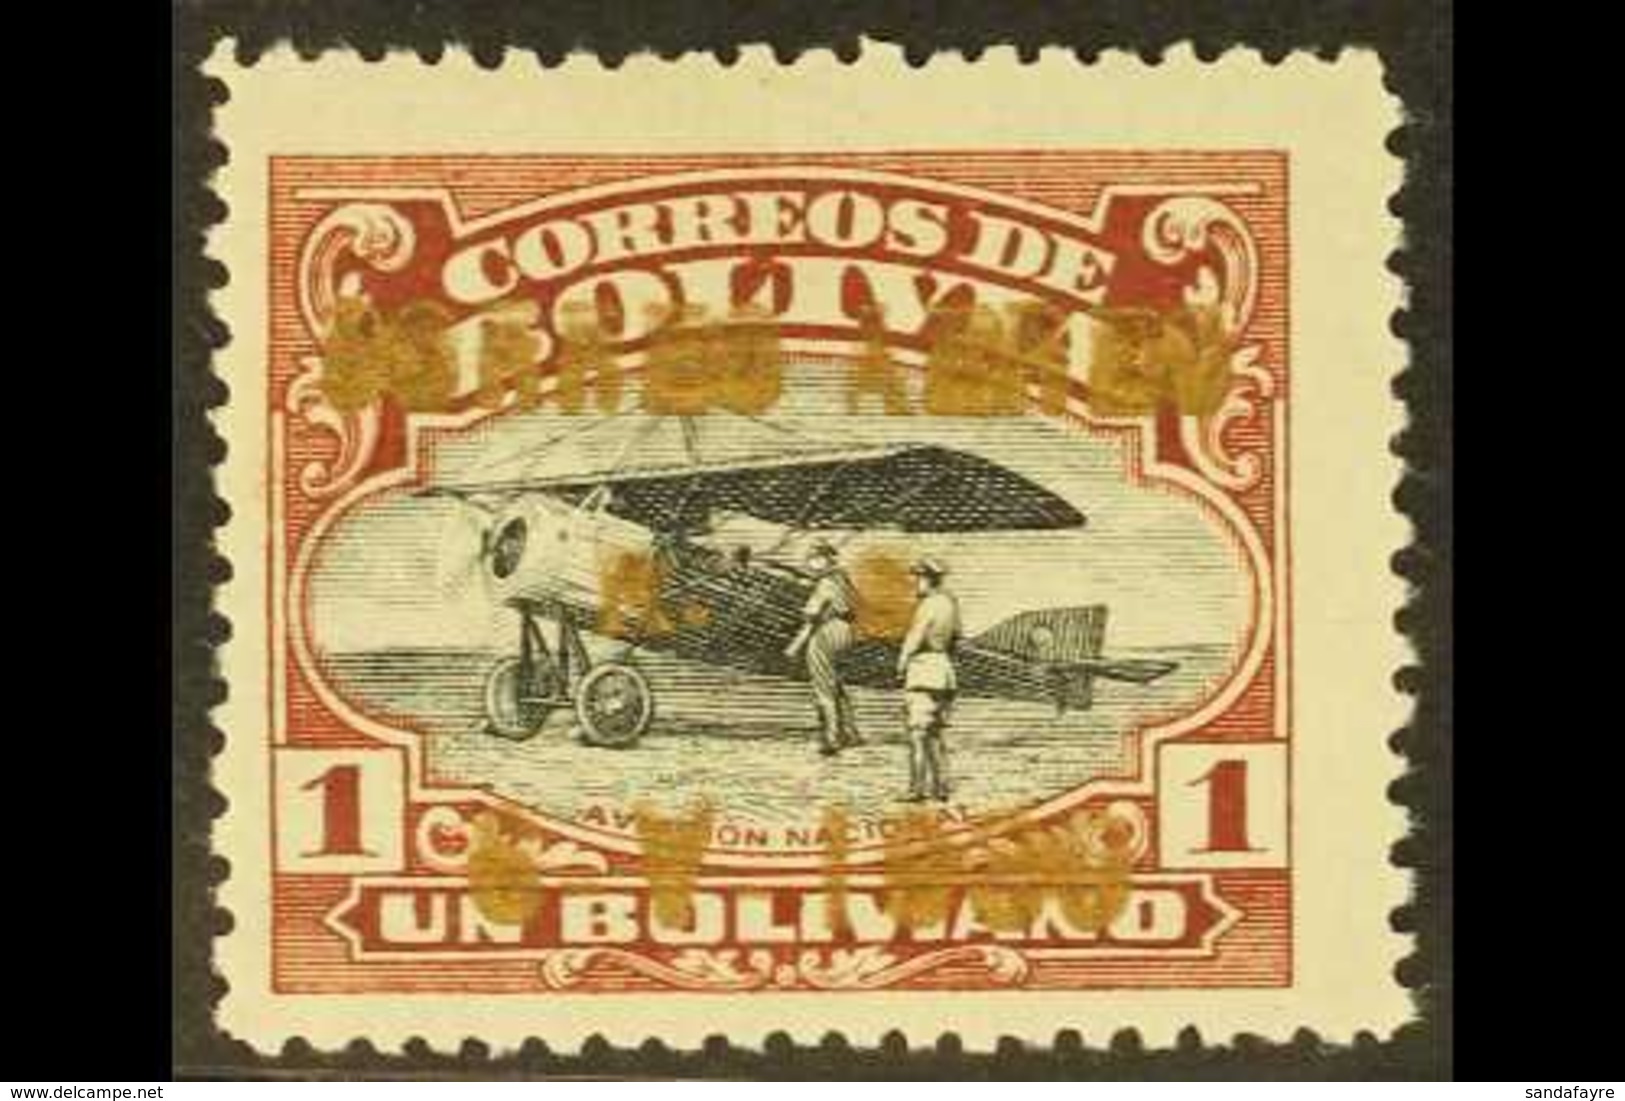 1930  1b Red-brown & Black Air "CORREO AEREO" Overprint In BRONZE (METALLIC) INK (Scott C23, SG 240), Fine Mint, Very Fr - Bolivia